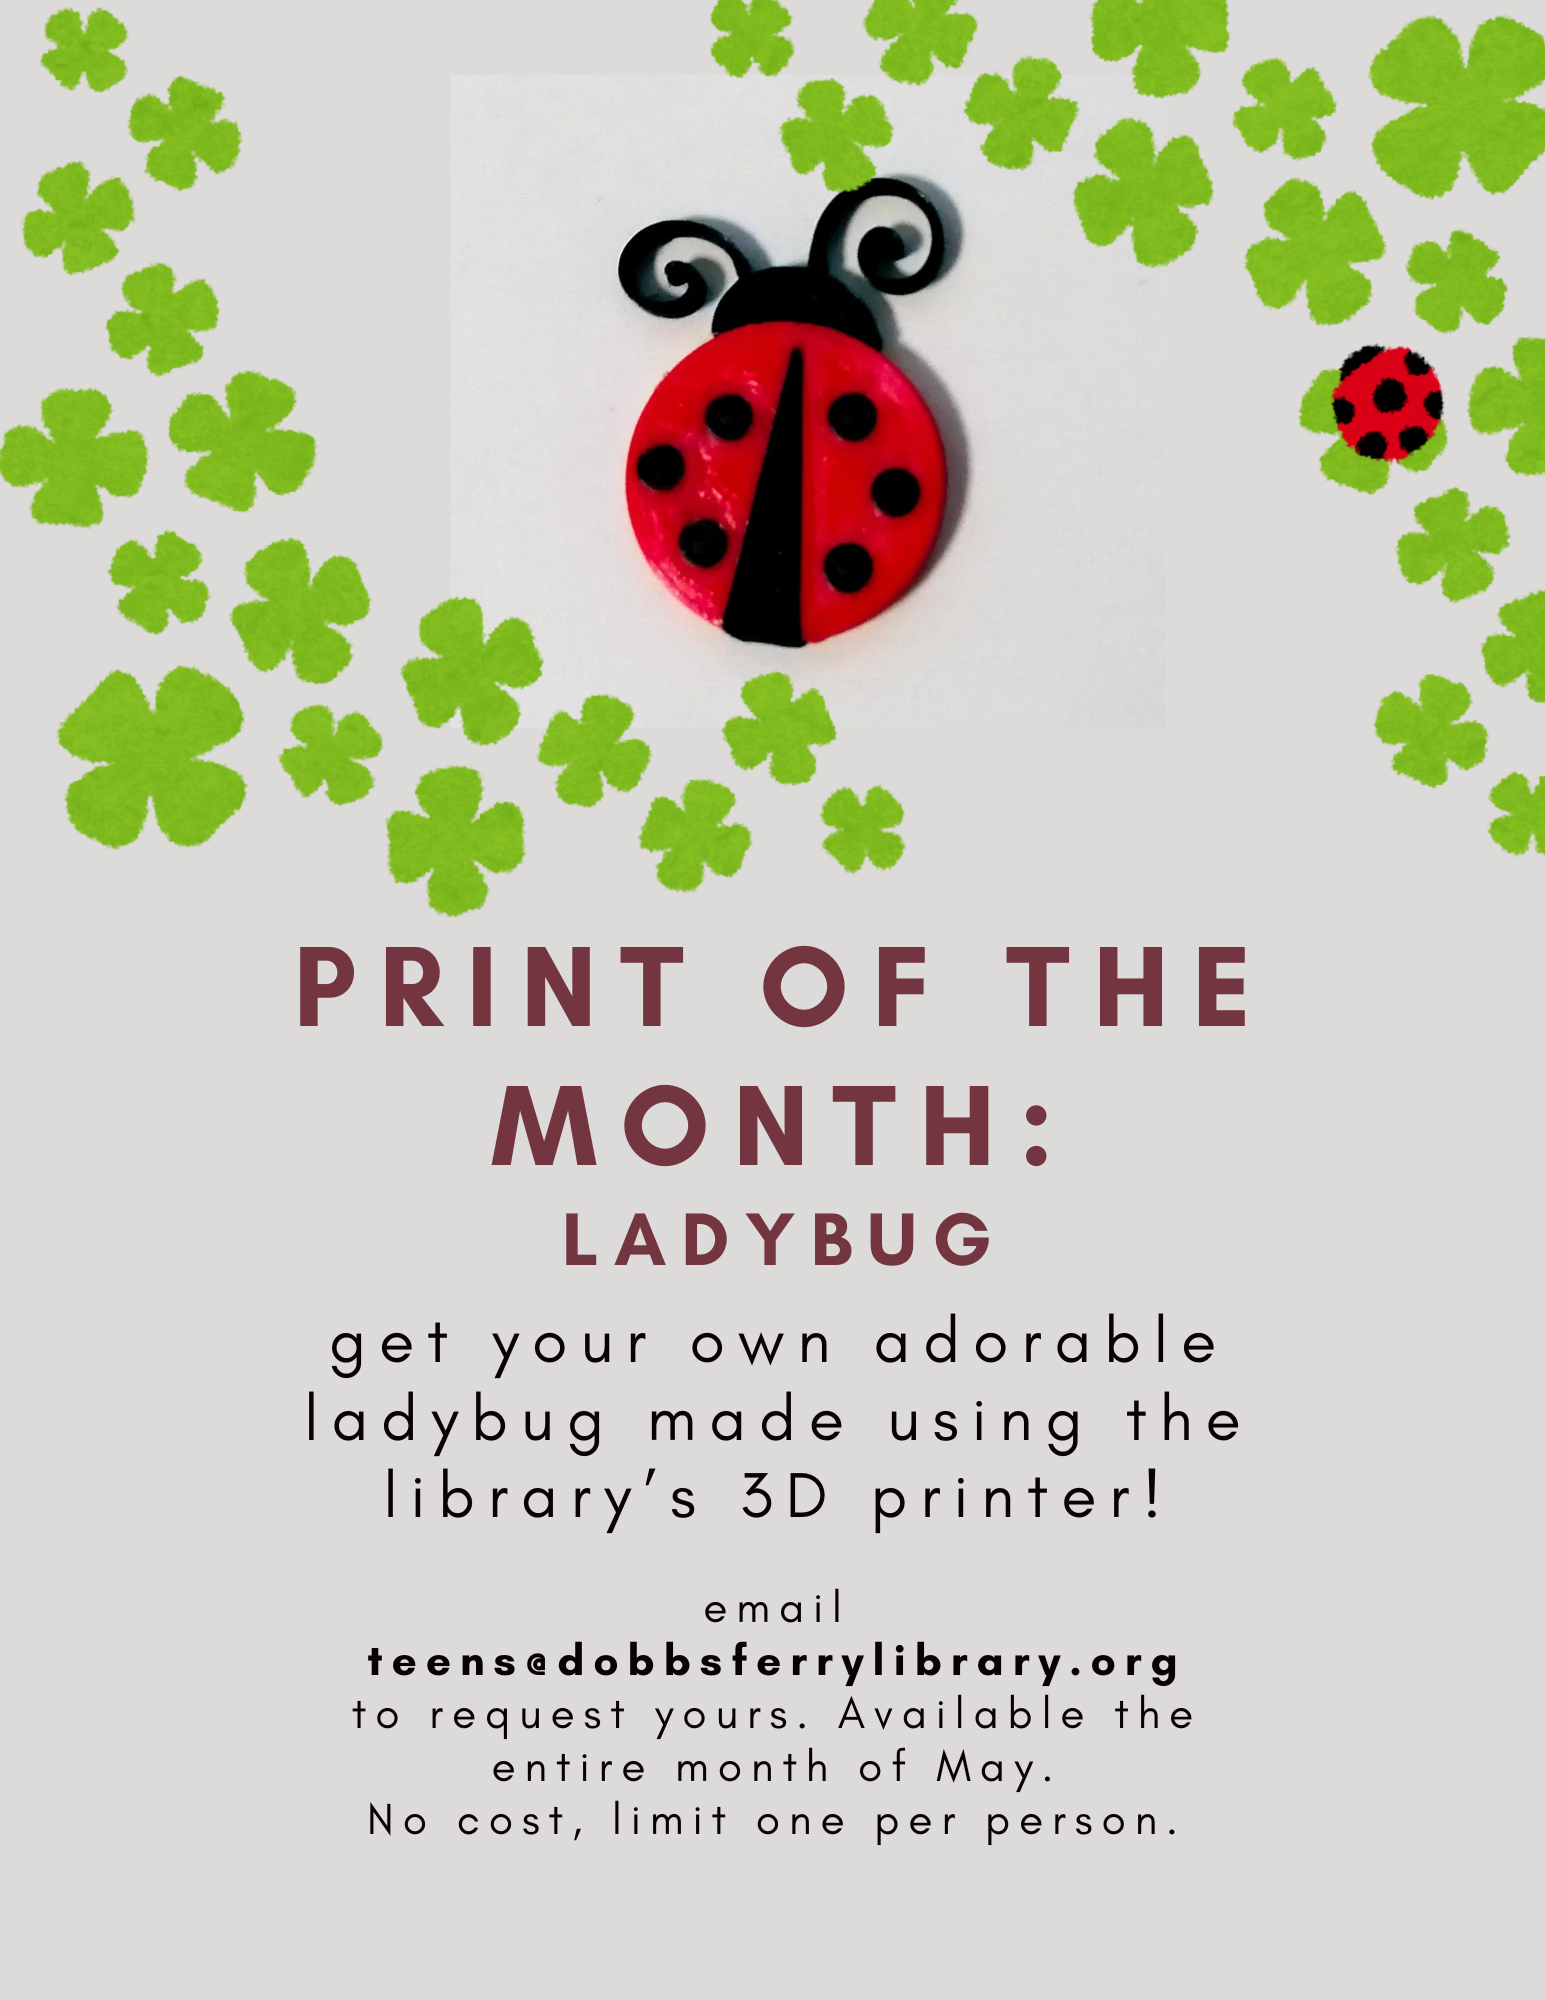 Print of the Month: Ladybug